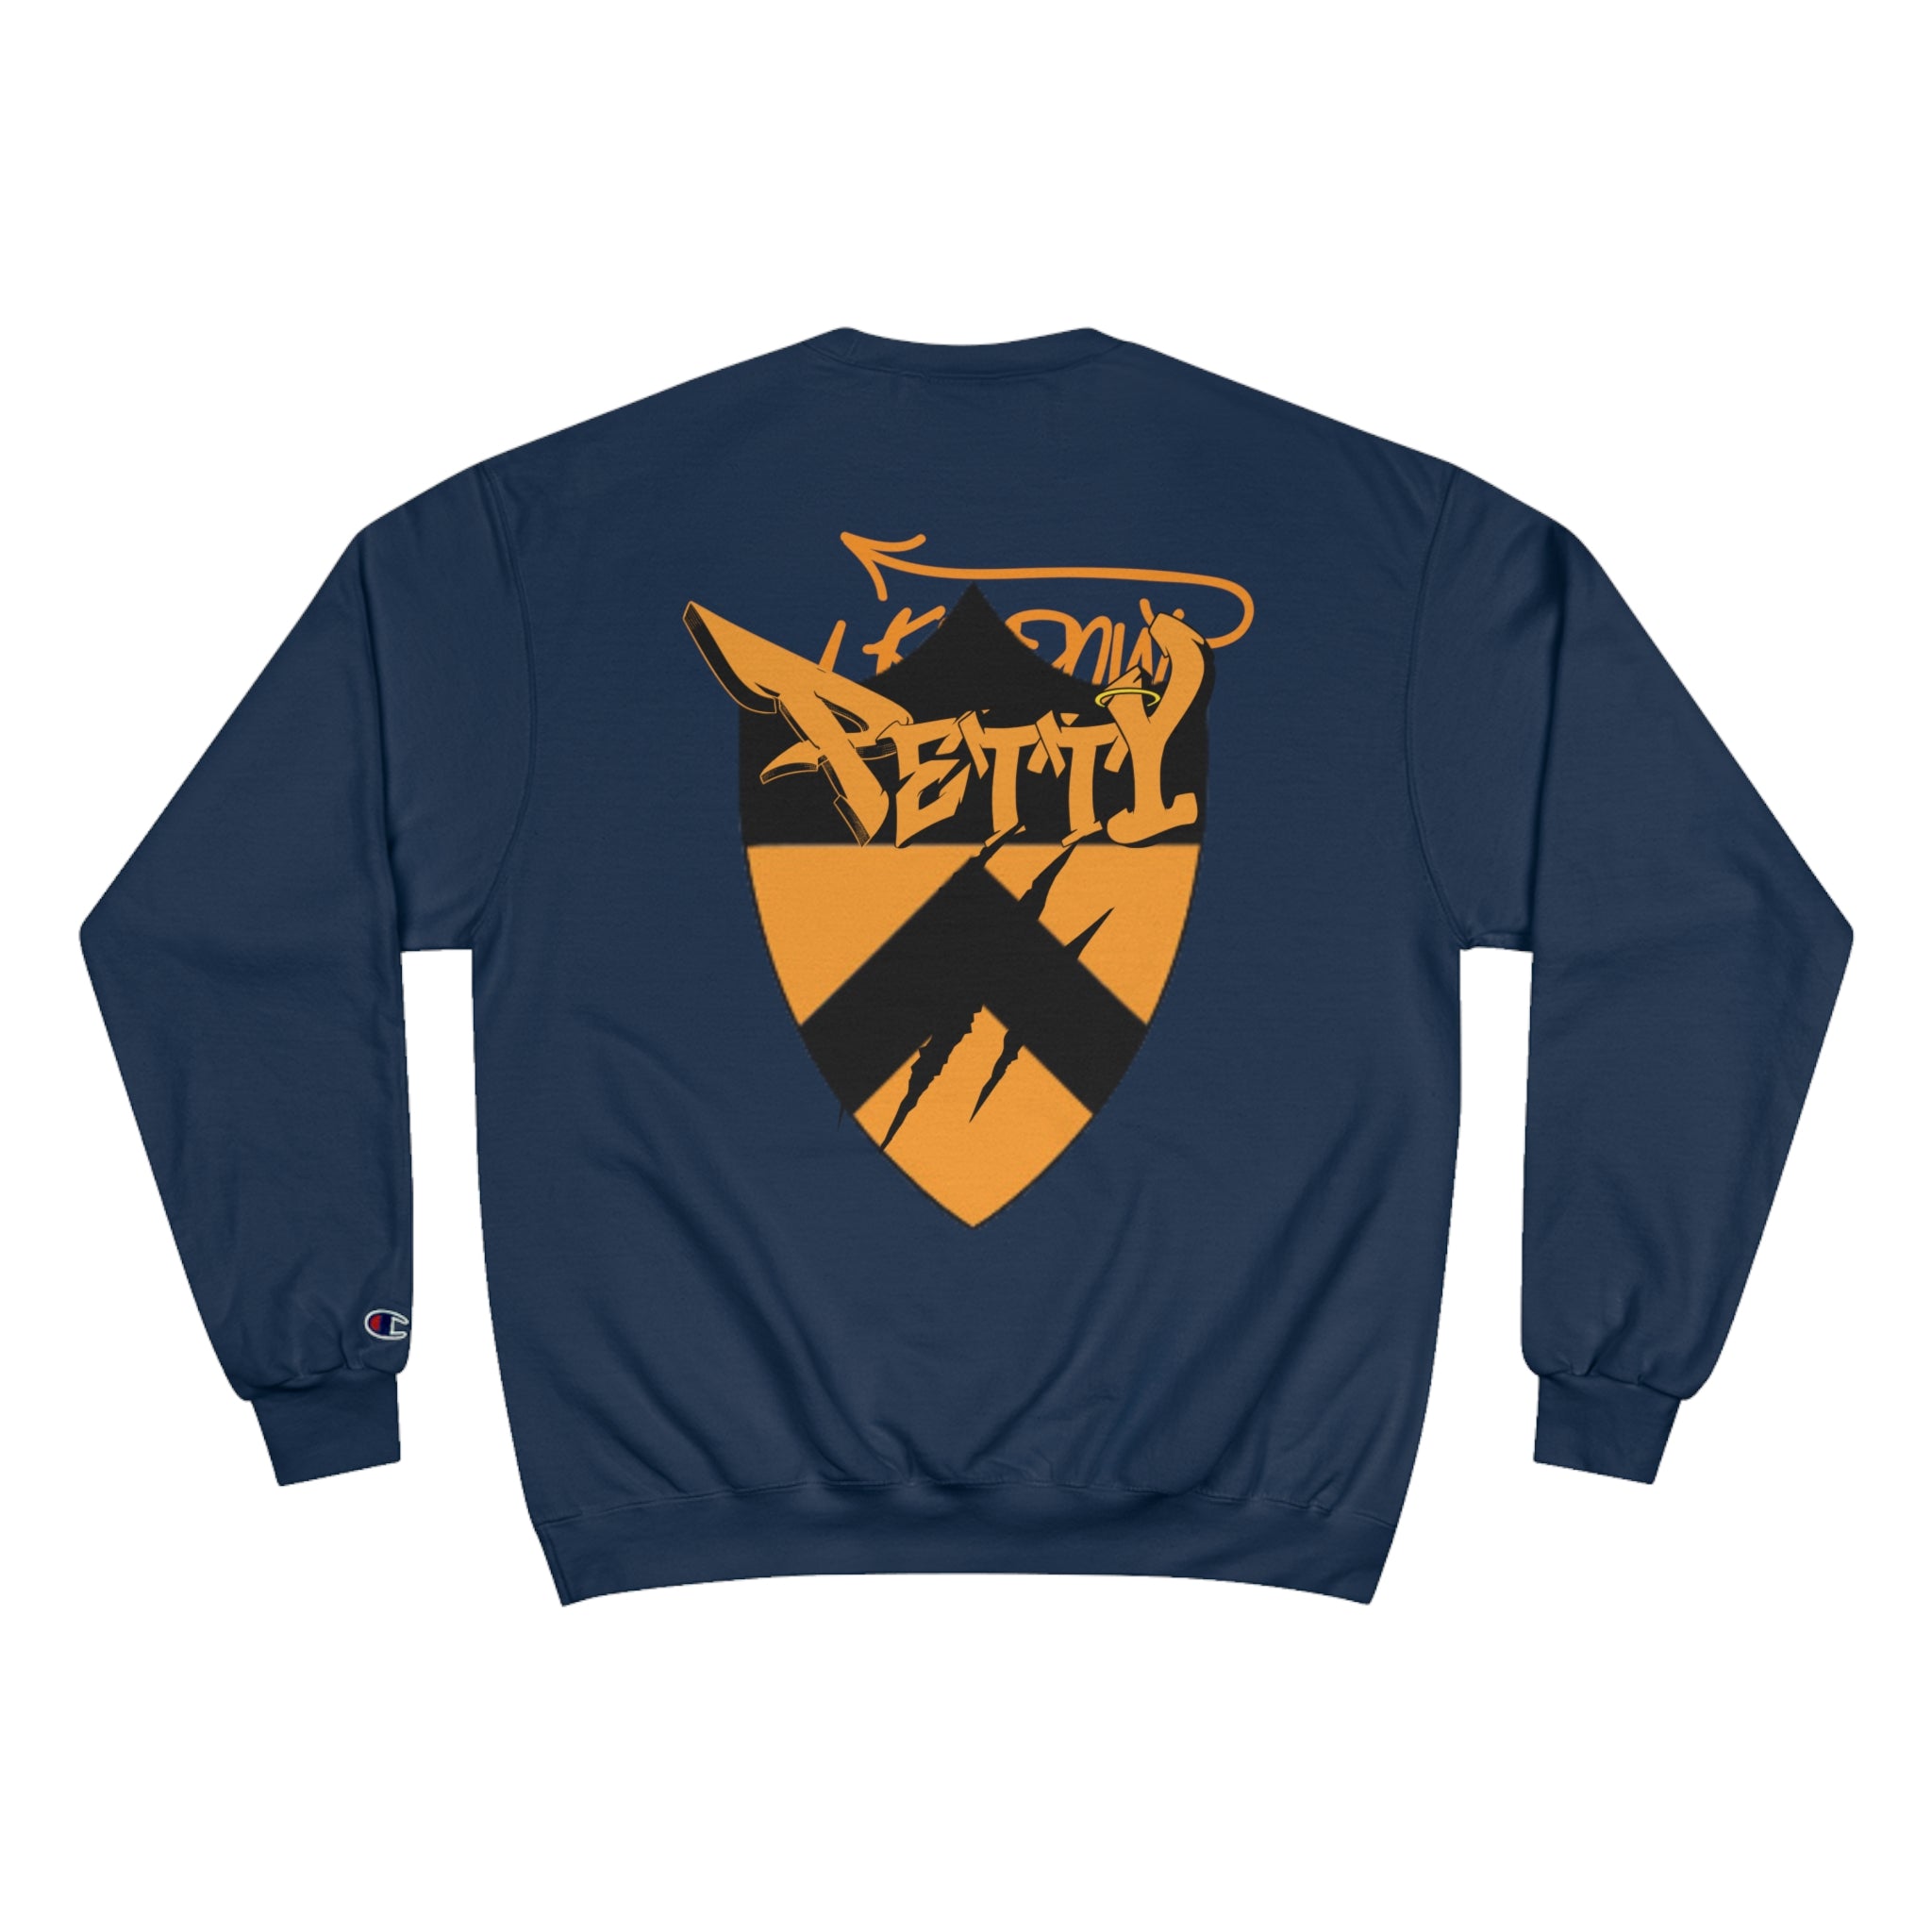 FURDreams ”NJ” IX Champion Sweatshirt